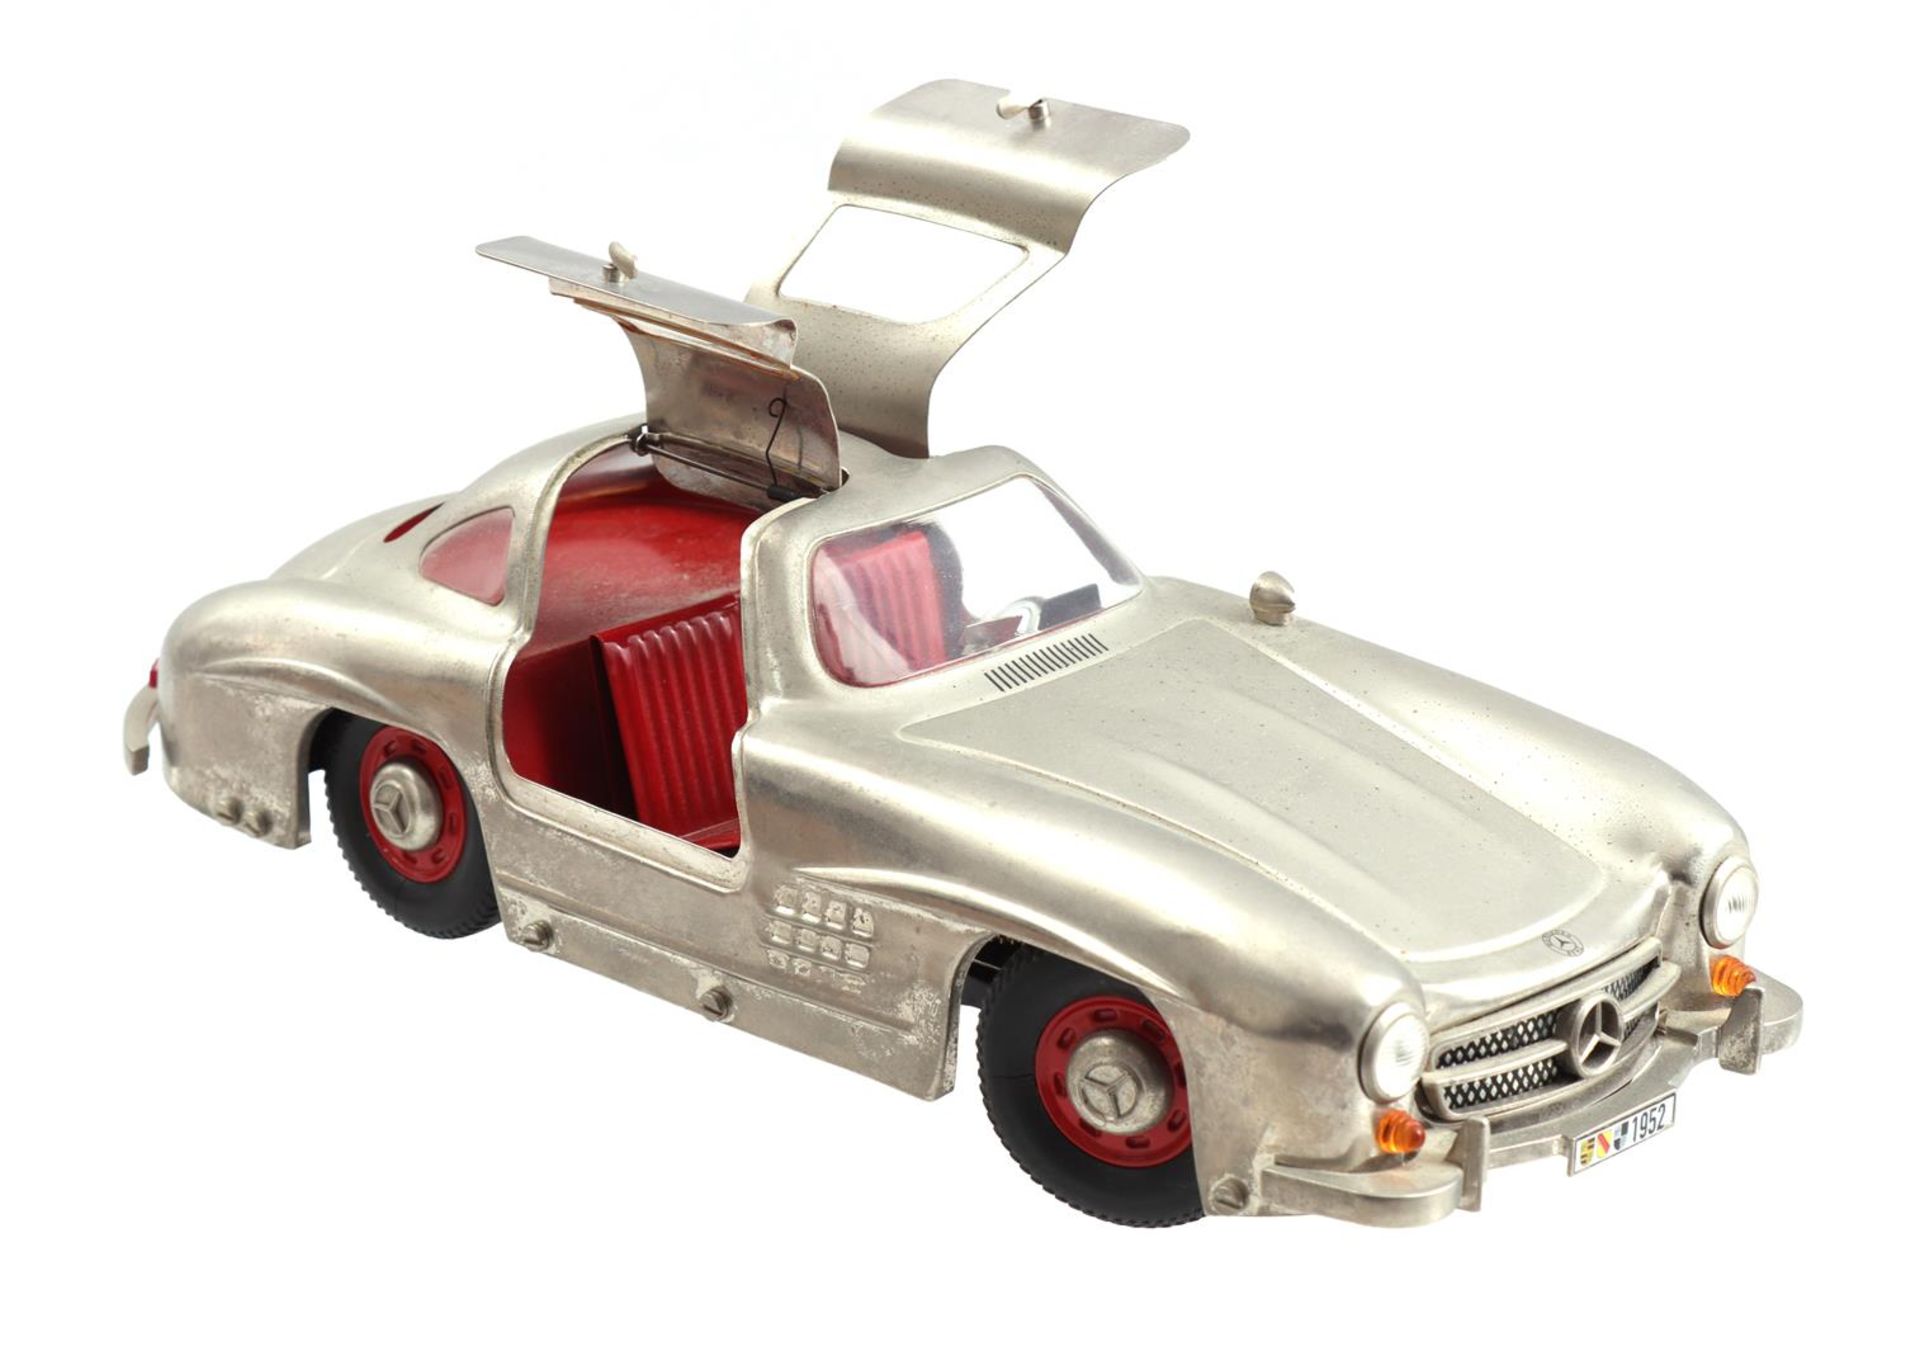 Märklin Mercedes scale model - Image 2 of 2